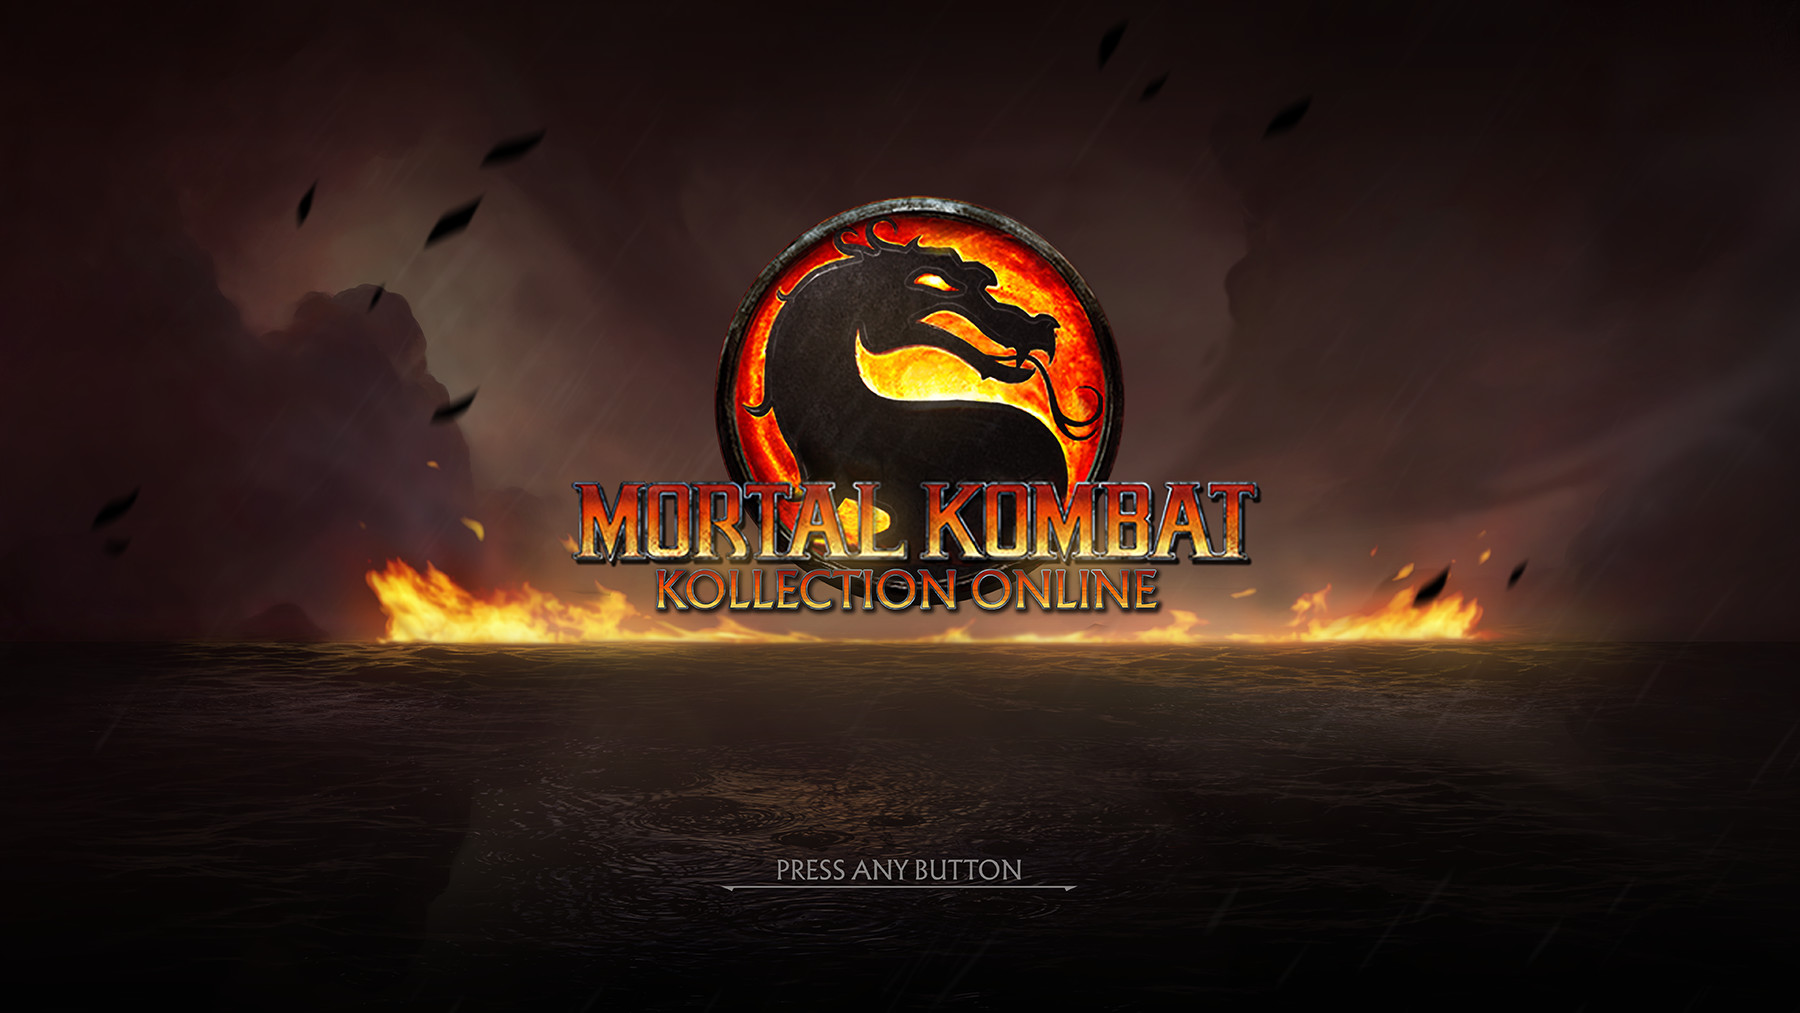 Cancelled Mortal Kombat Remastered Screenshots Emerge - Mortal Kombat Online